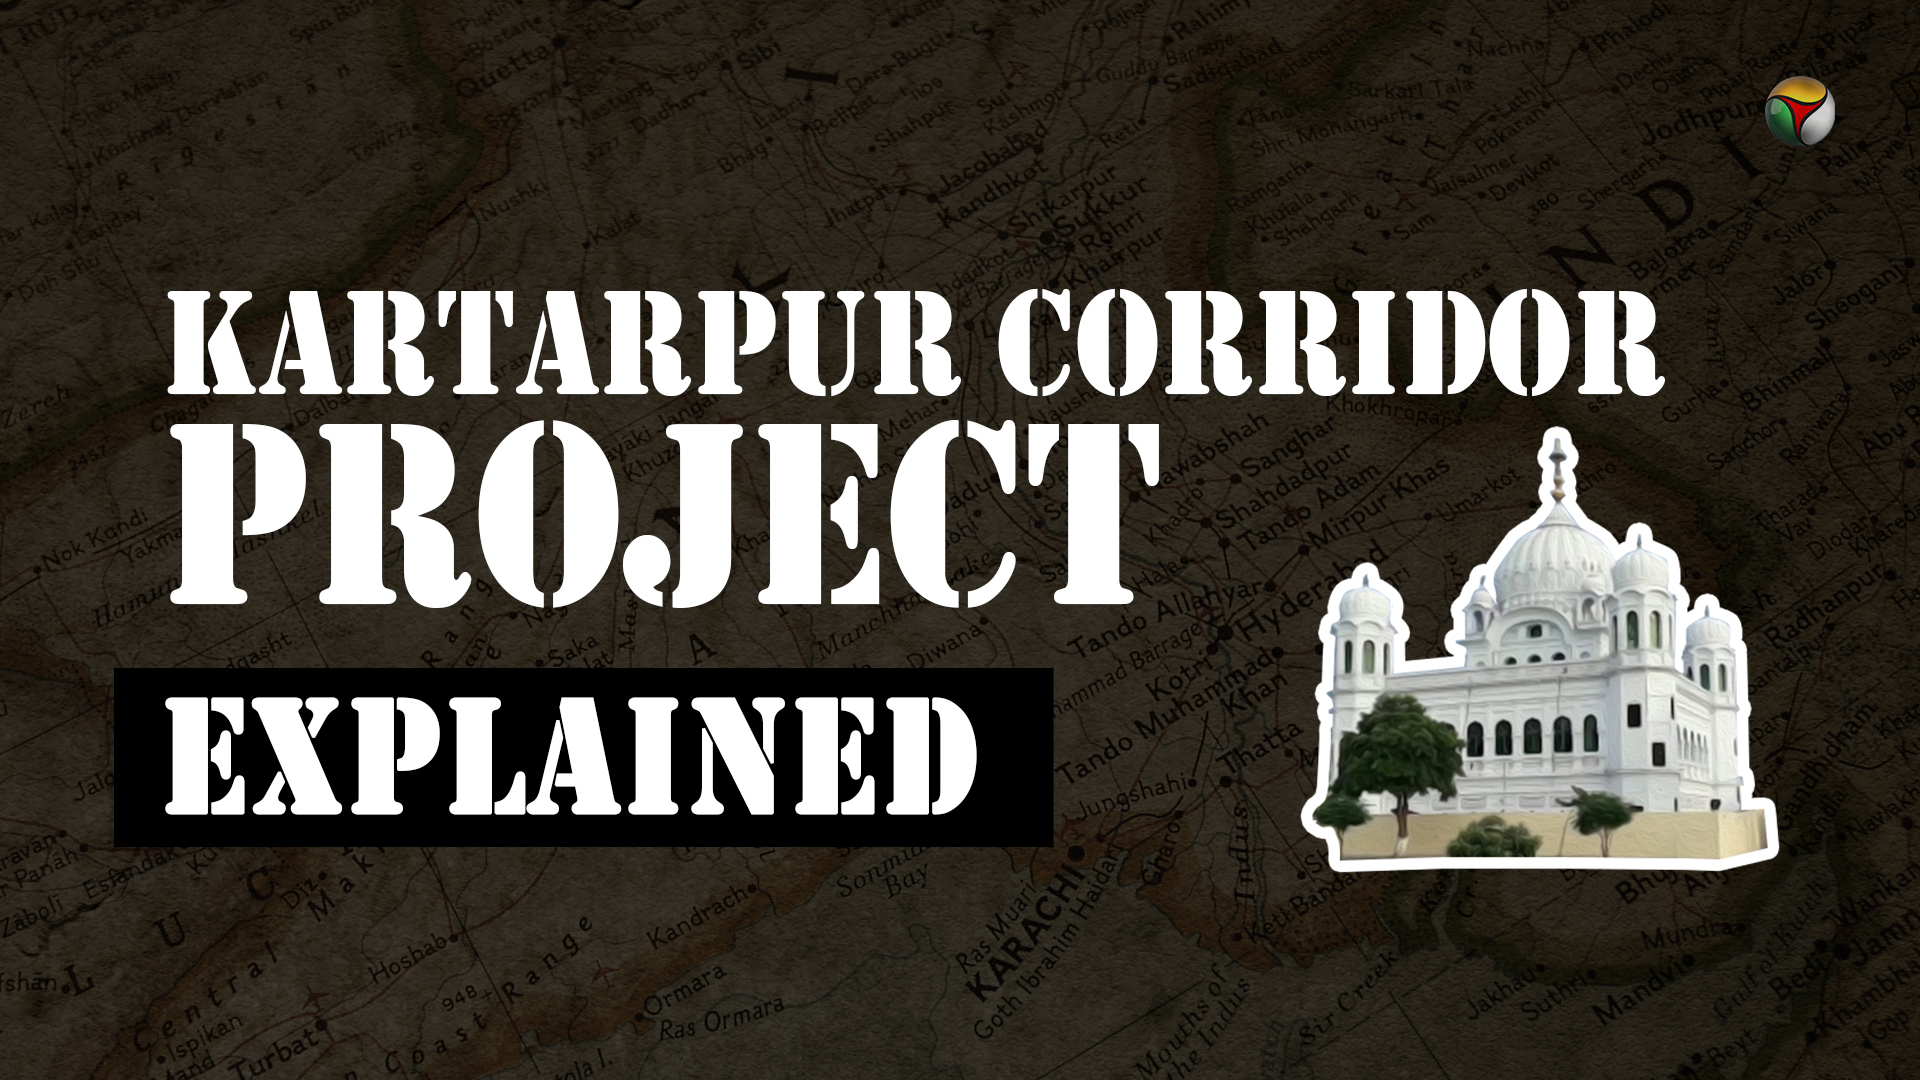 Kartarpur corridor project: Explained